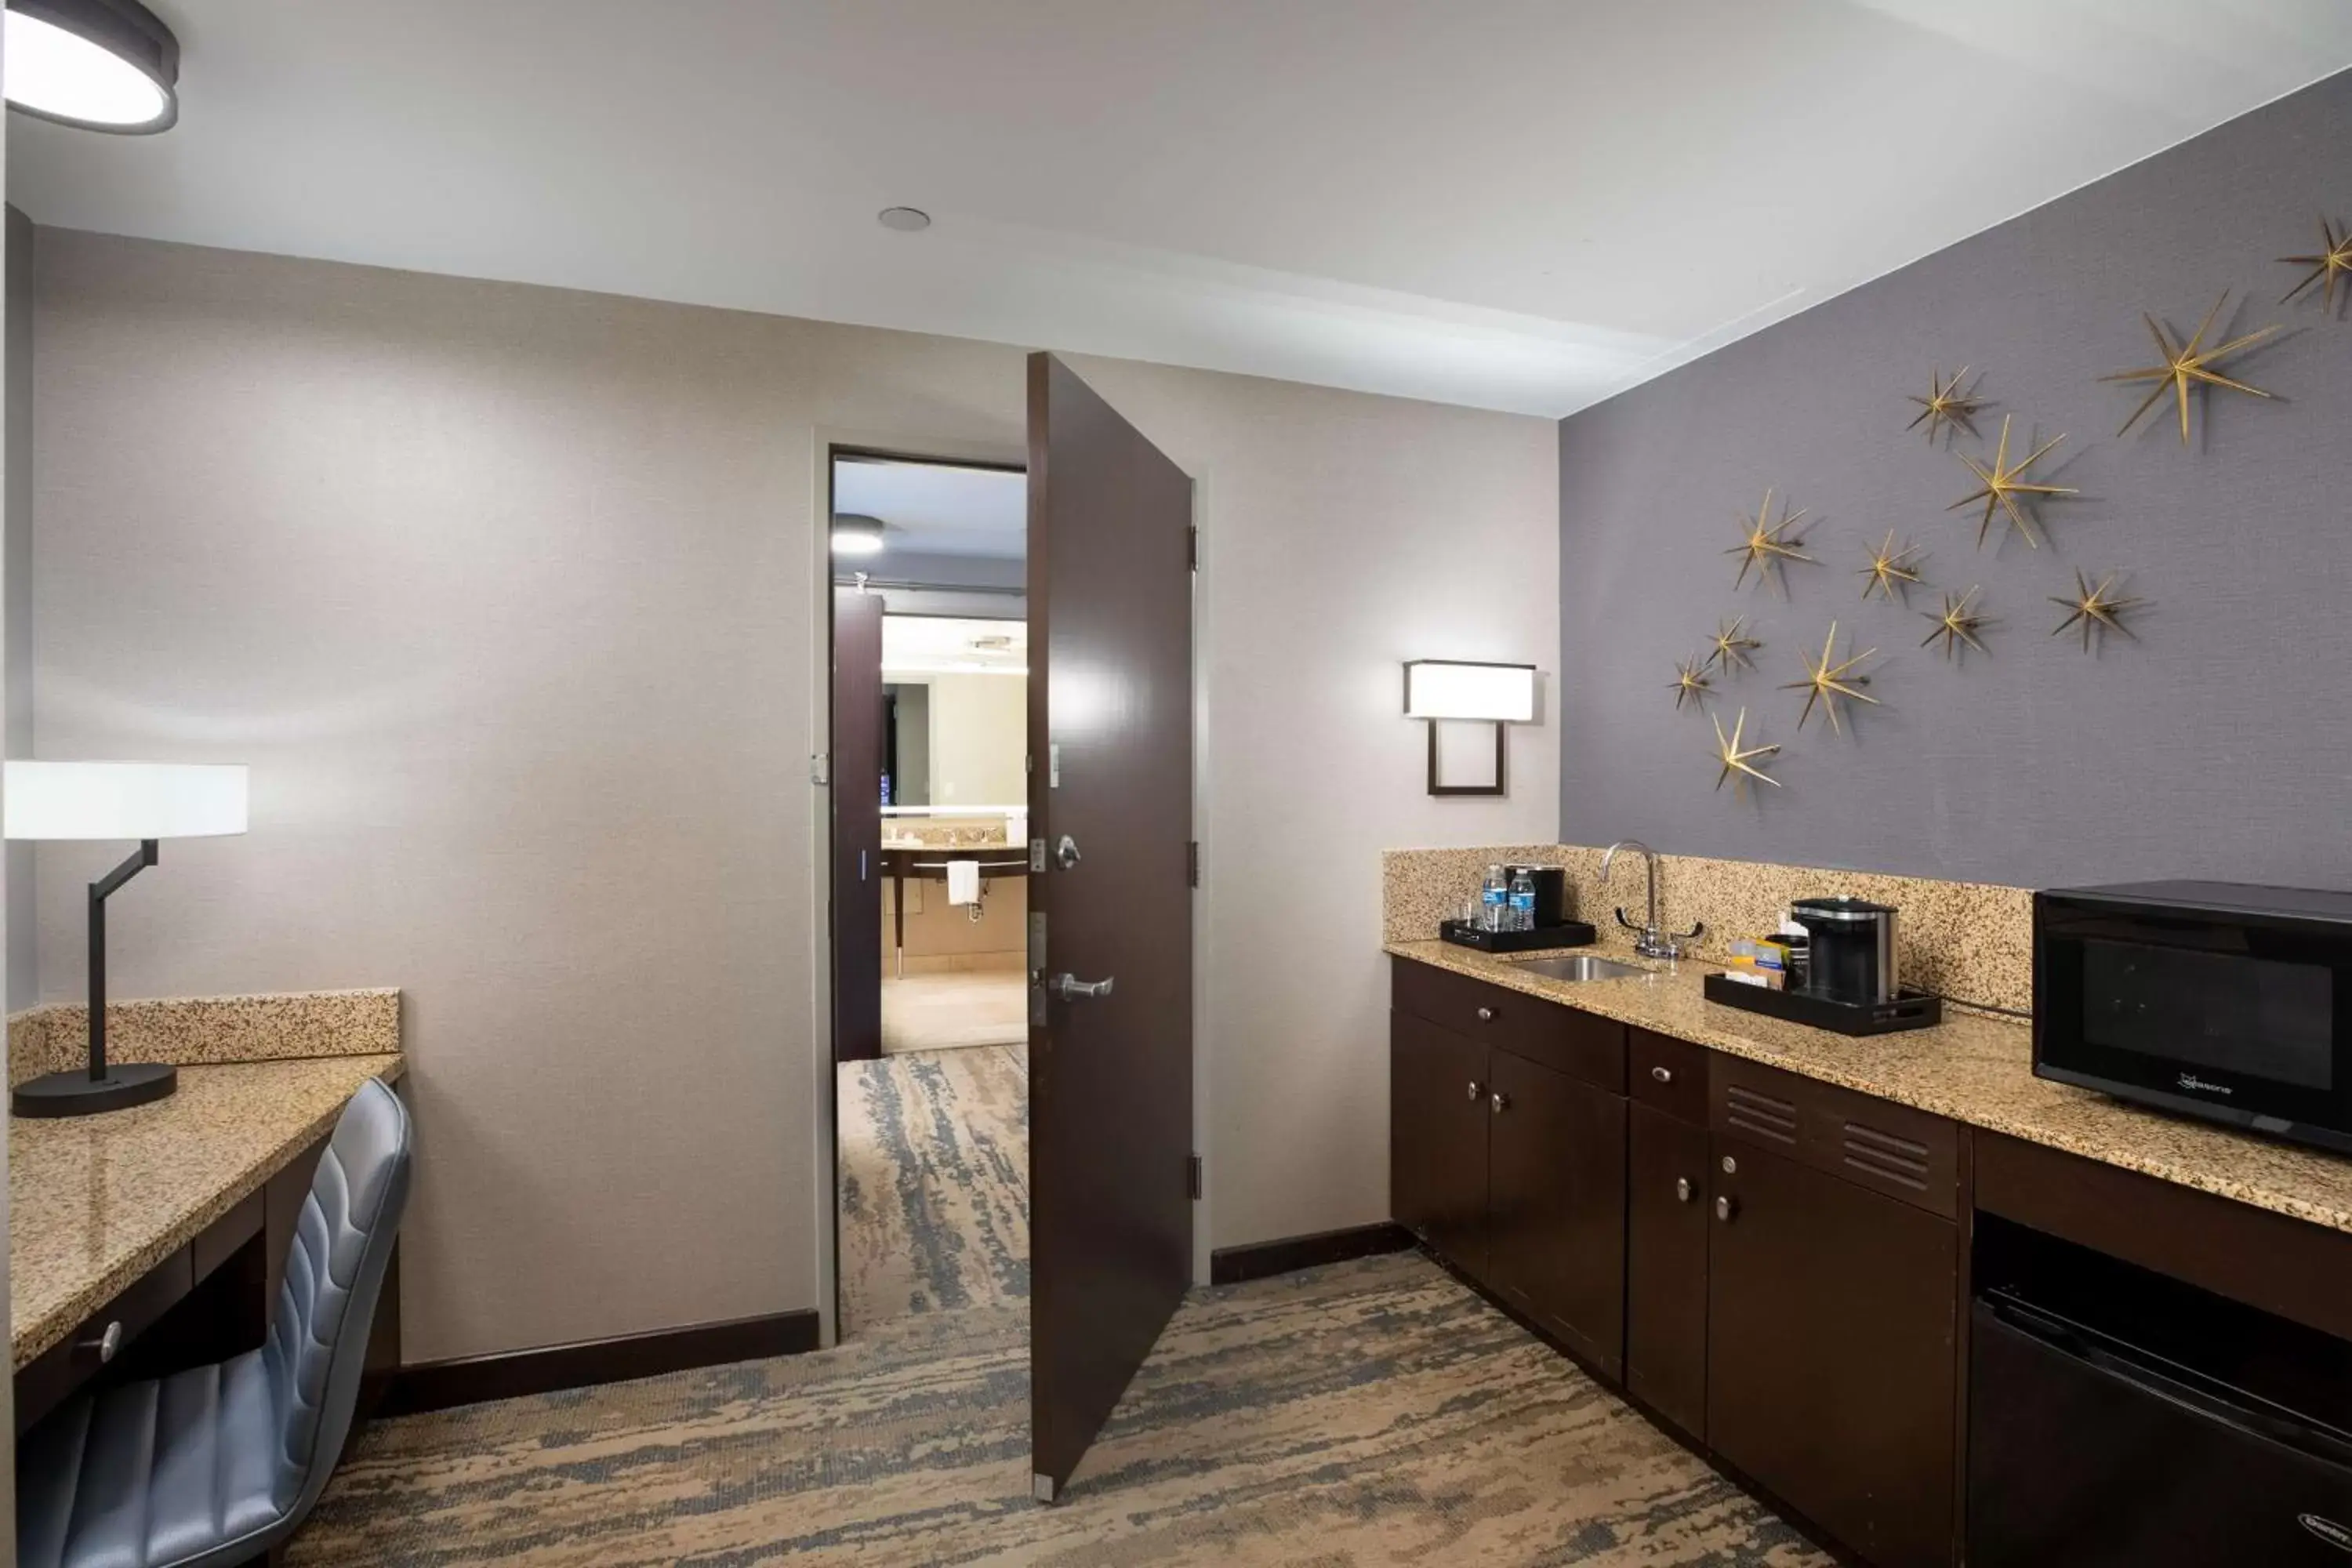 Photo of the whole room, Bathroom in Hilton Americas- Houston